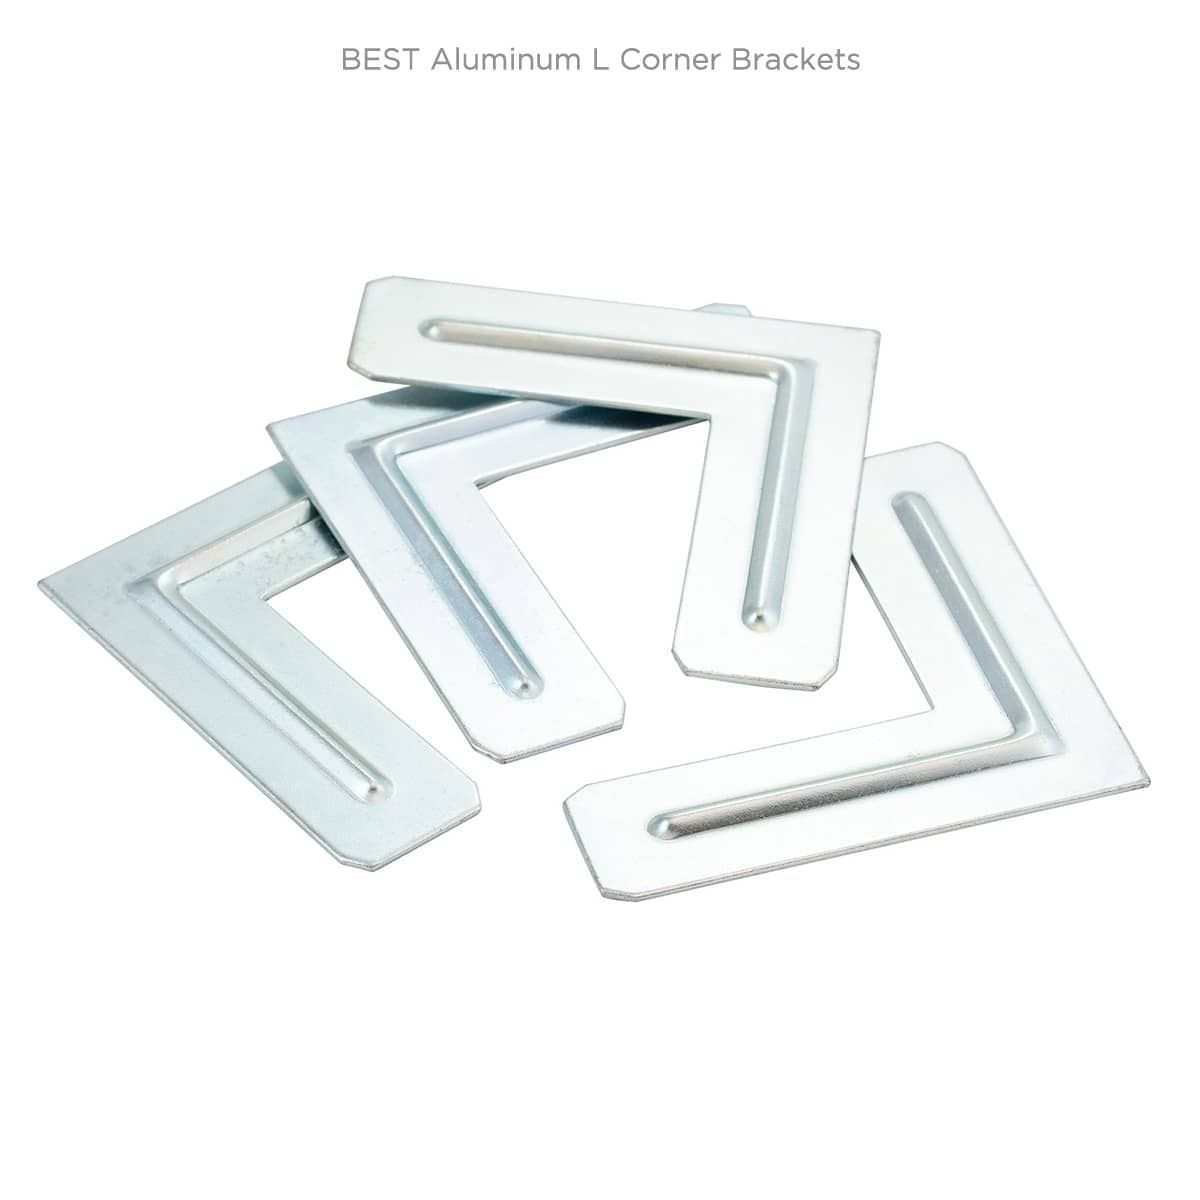 BEST Aluminum L Corner Brackets